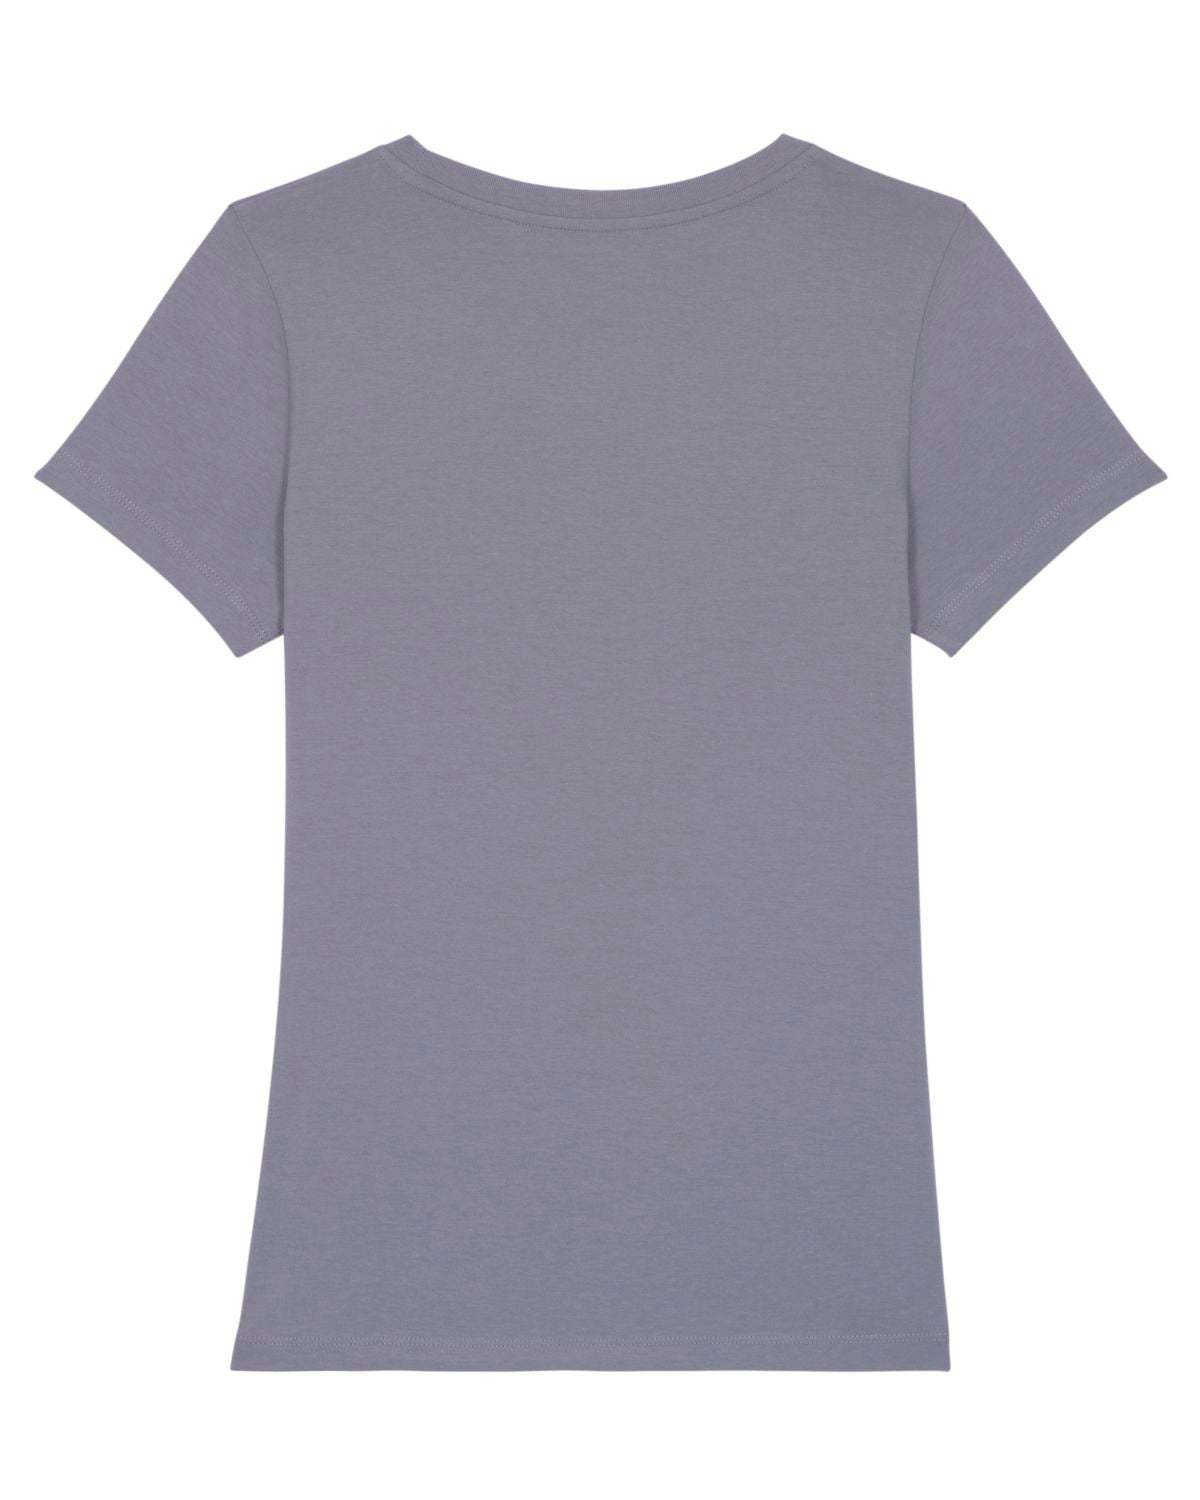 DEERN Shirt lava grey XL